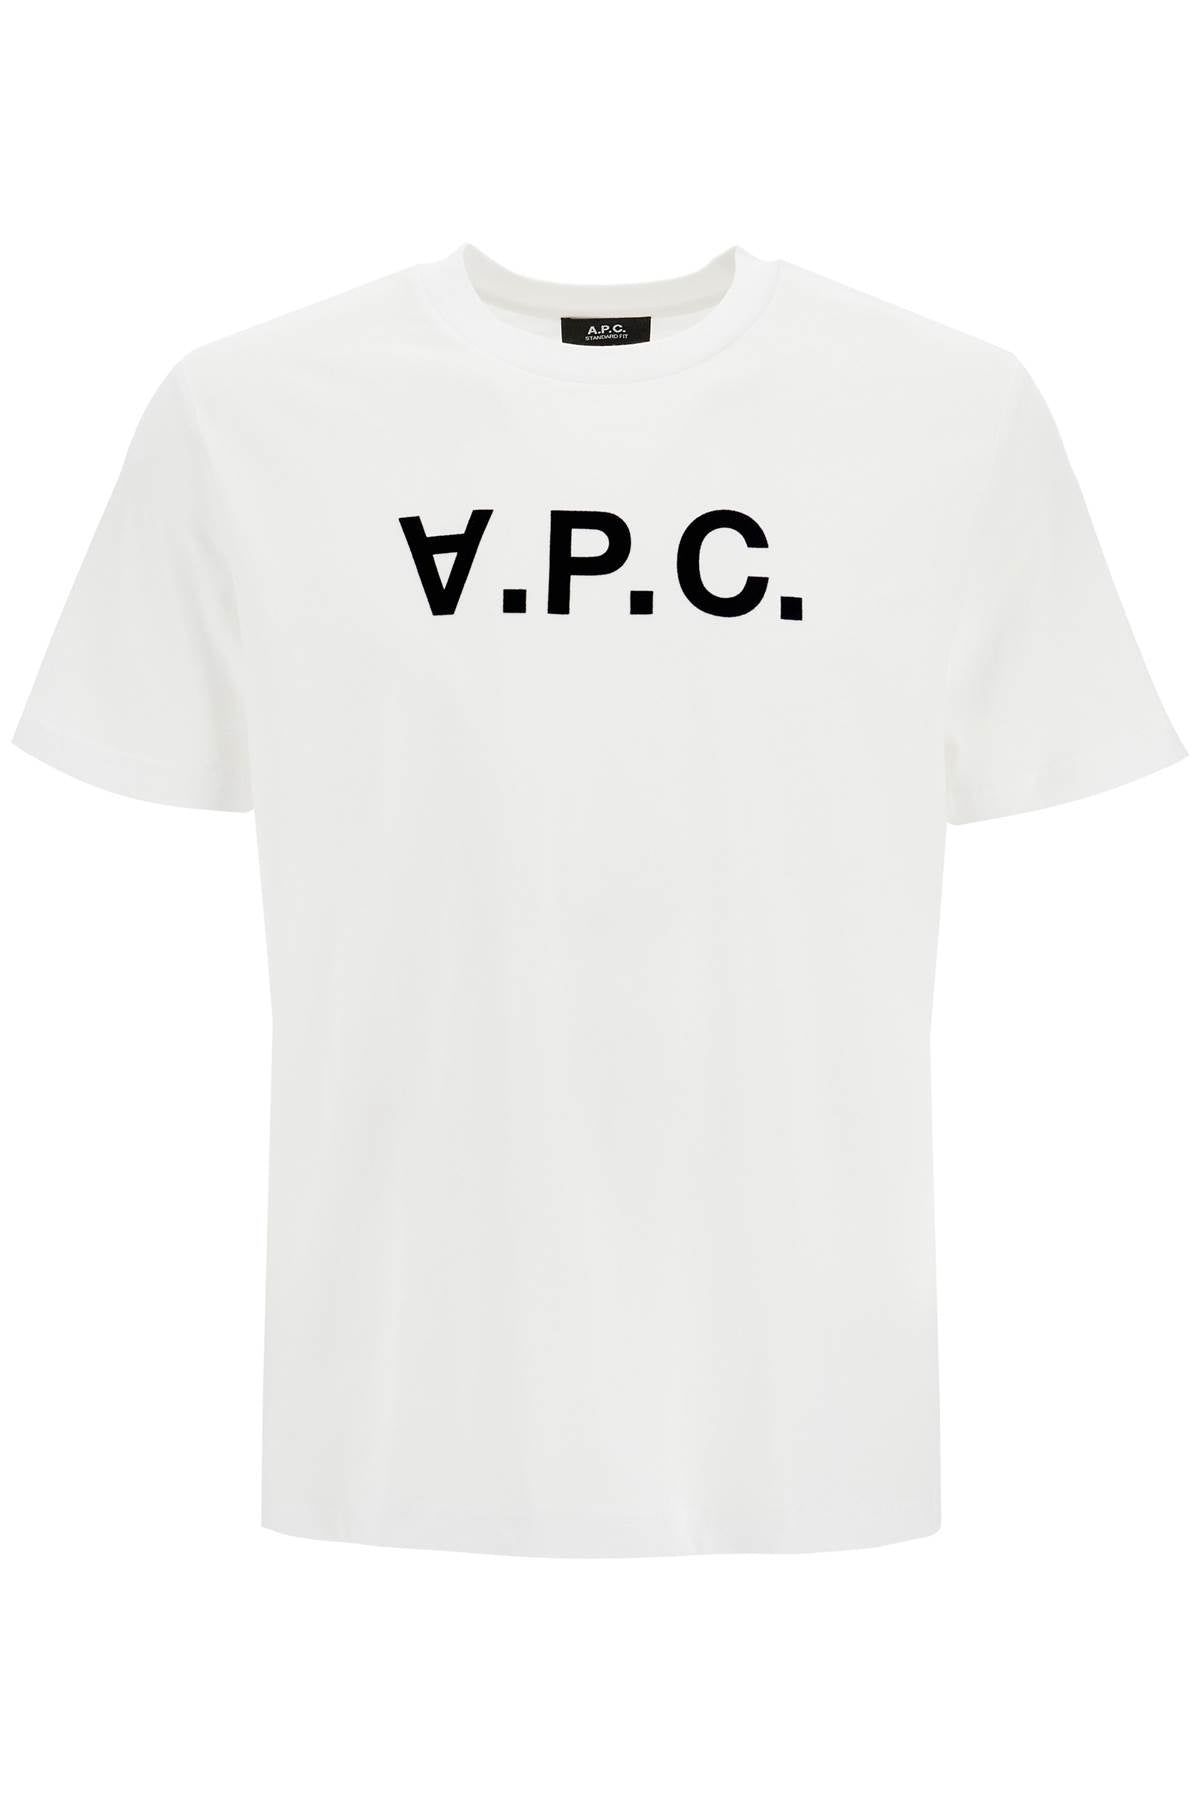 "large vpc t-0